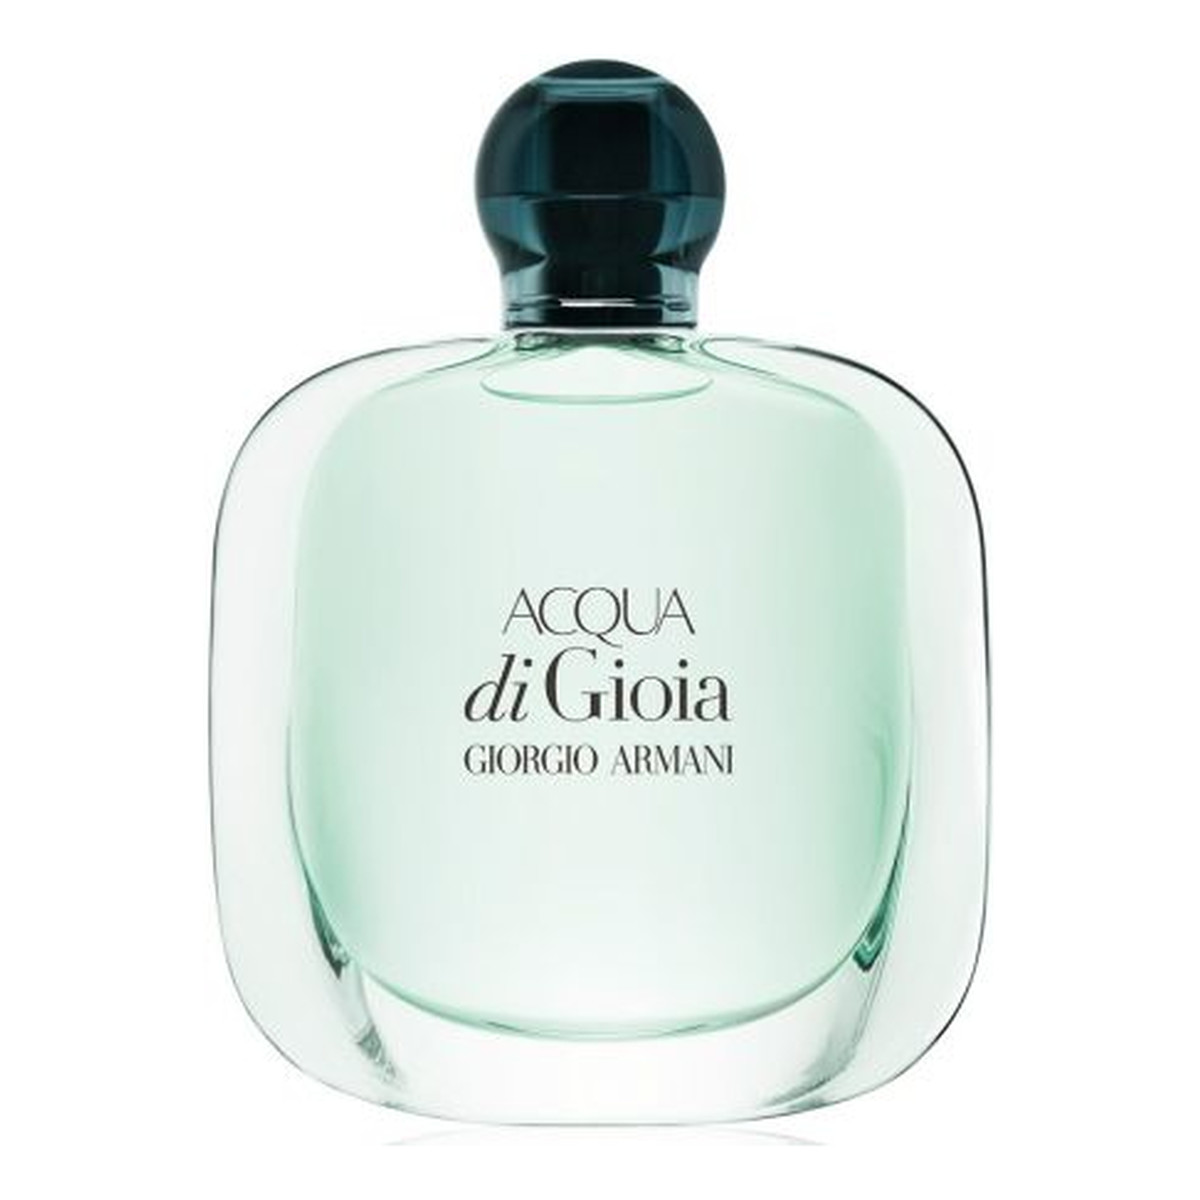 Giorgio Armani Acqua di Gioia Woda perfumowana TESTER 50ml